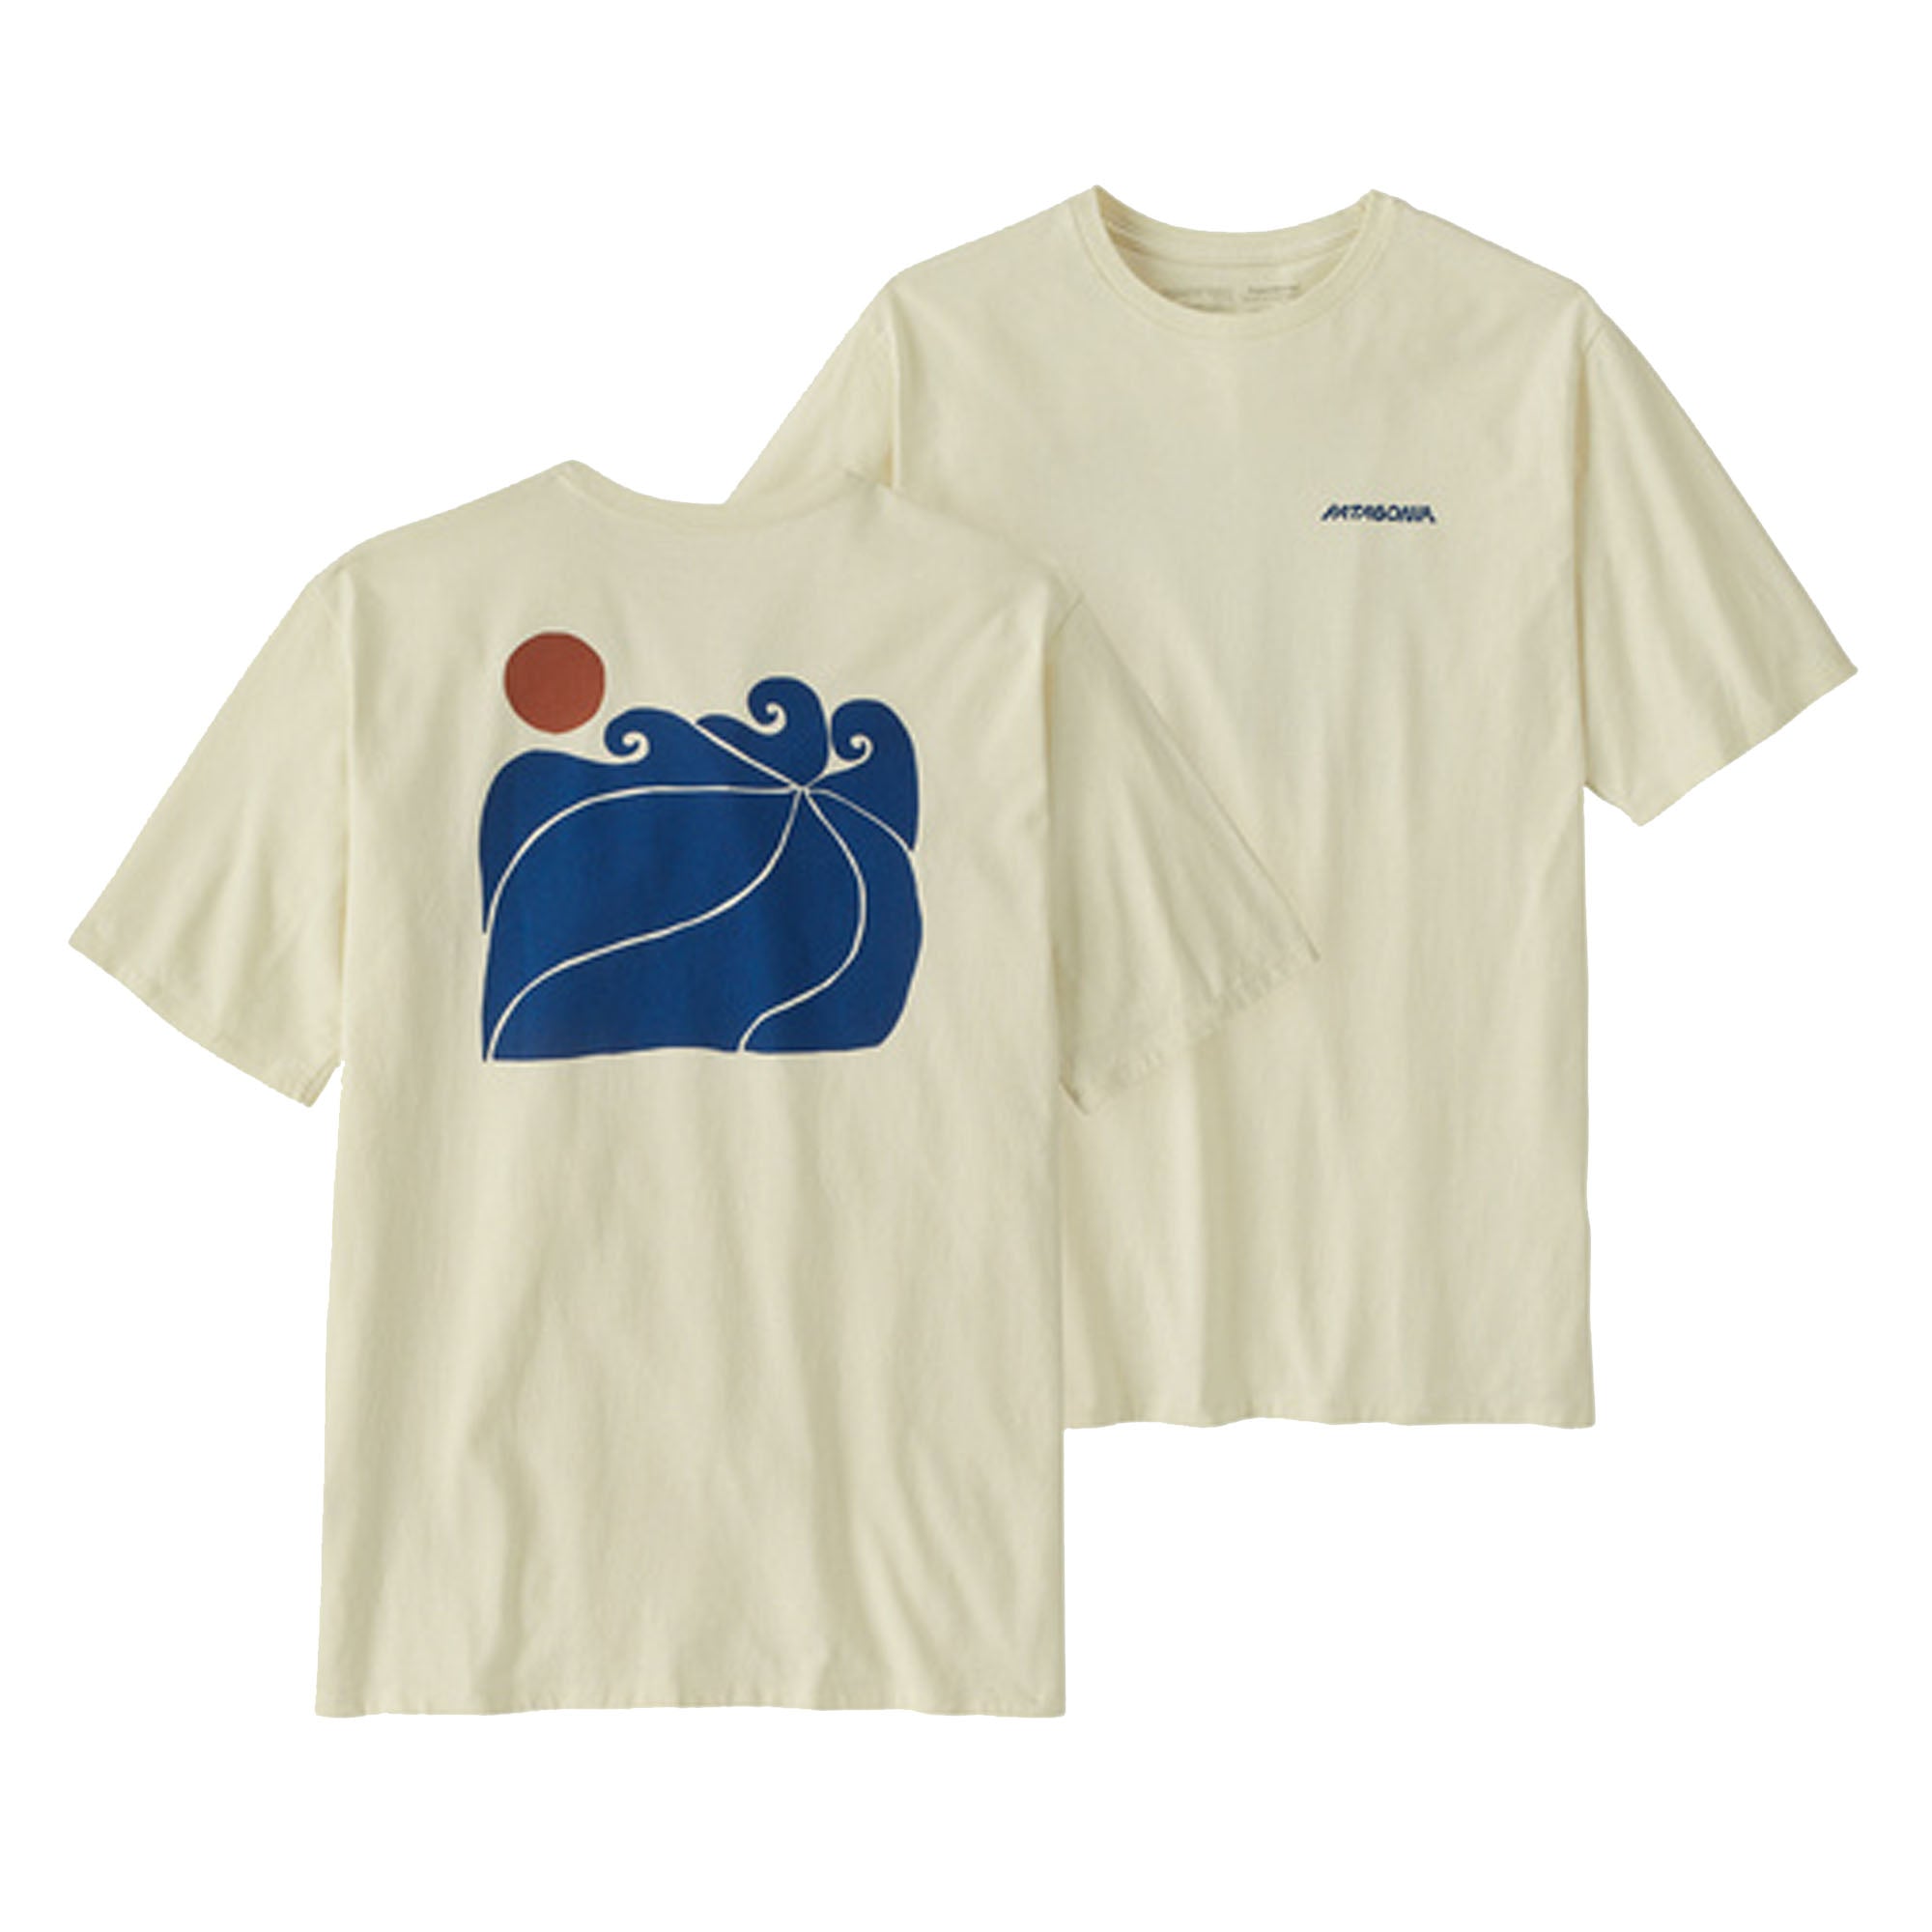 Patagonia Sunrise Rollers Responsibili-Tee Men's S/S T-Shirt